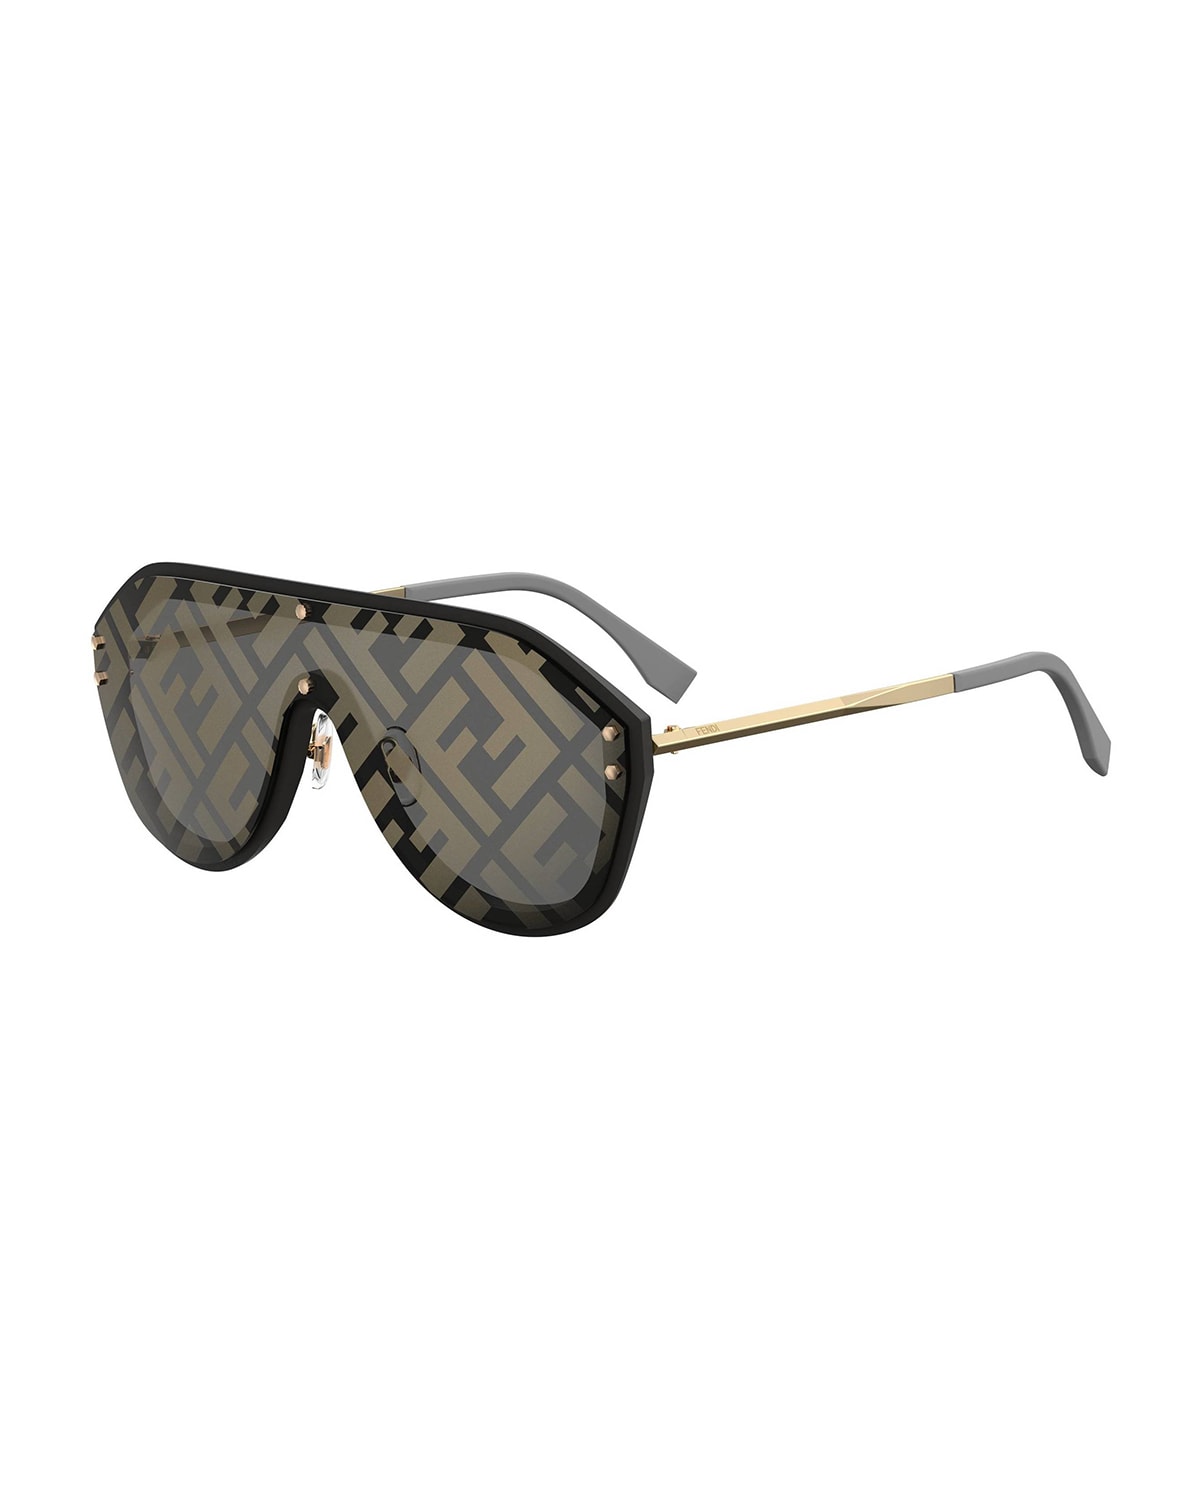 Fendi Ff Shield Sunglasses In Black/gold | ModeSens